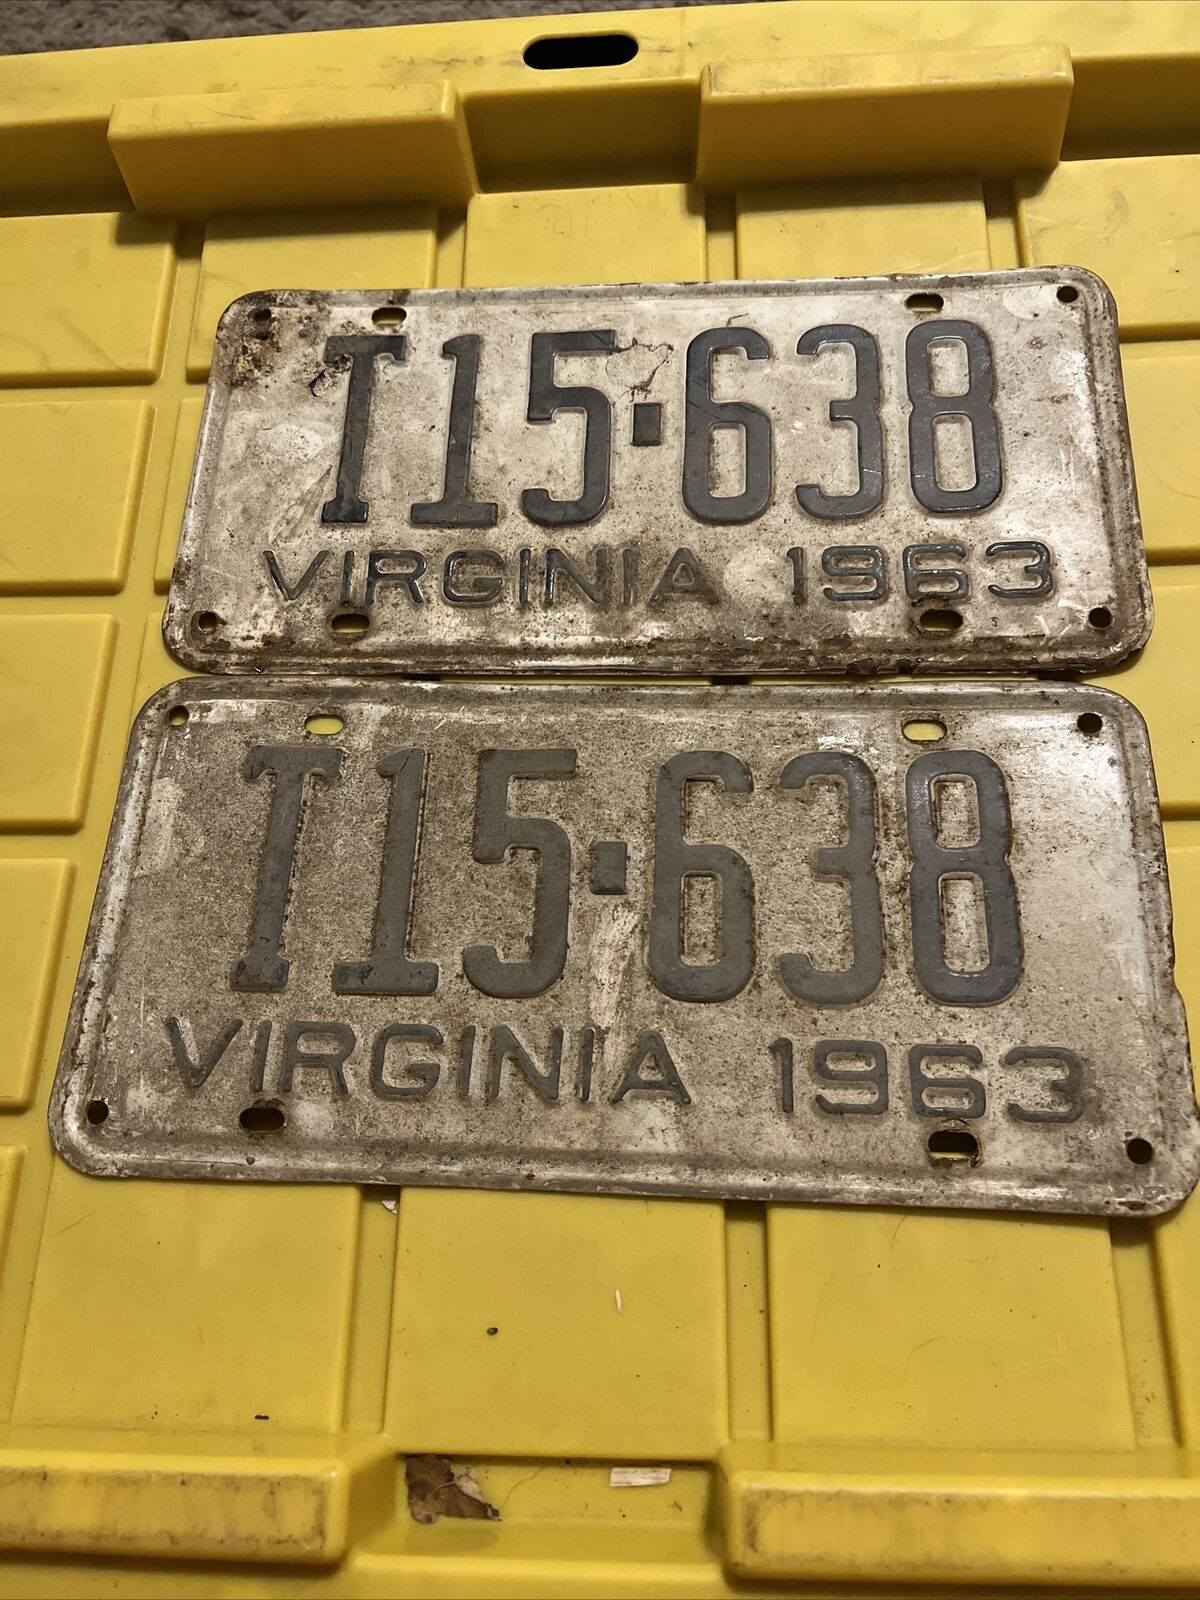 1963 Virginia License Plate T15-638